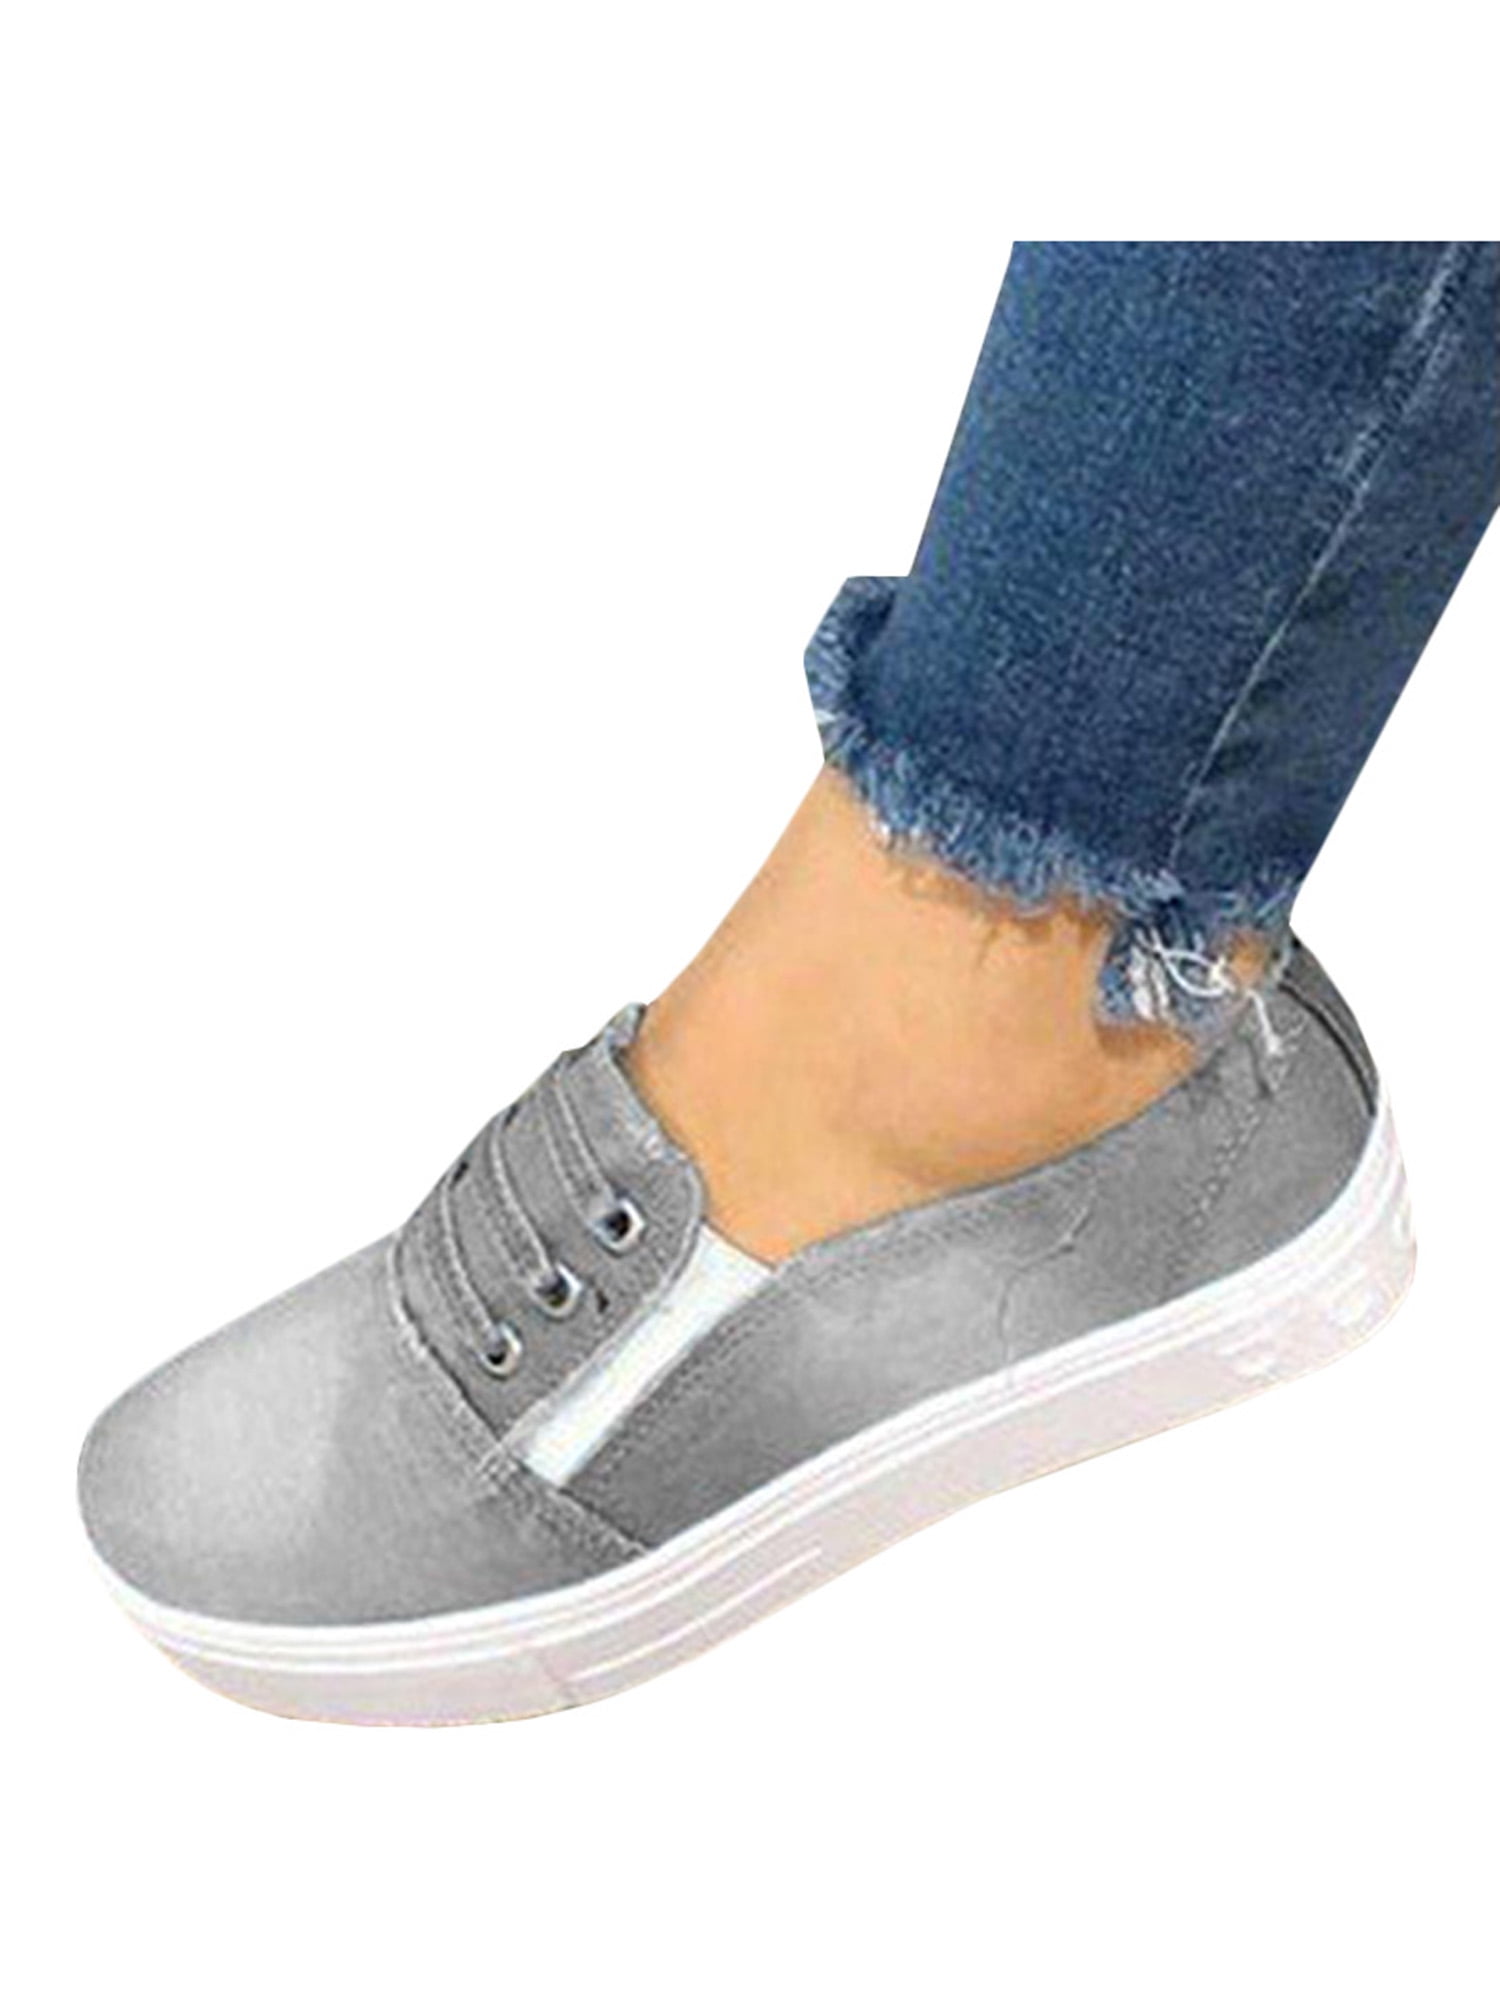 women's gray slip on sneakers